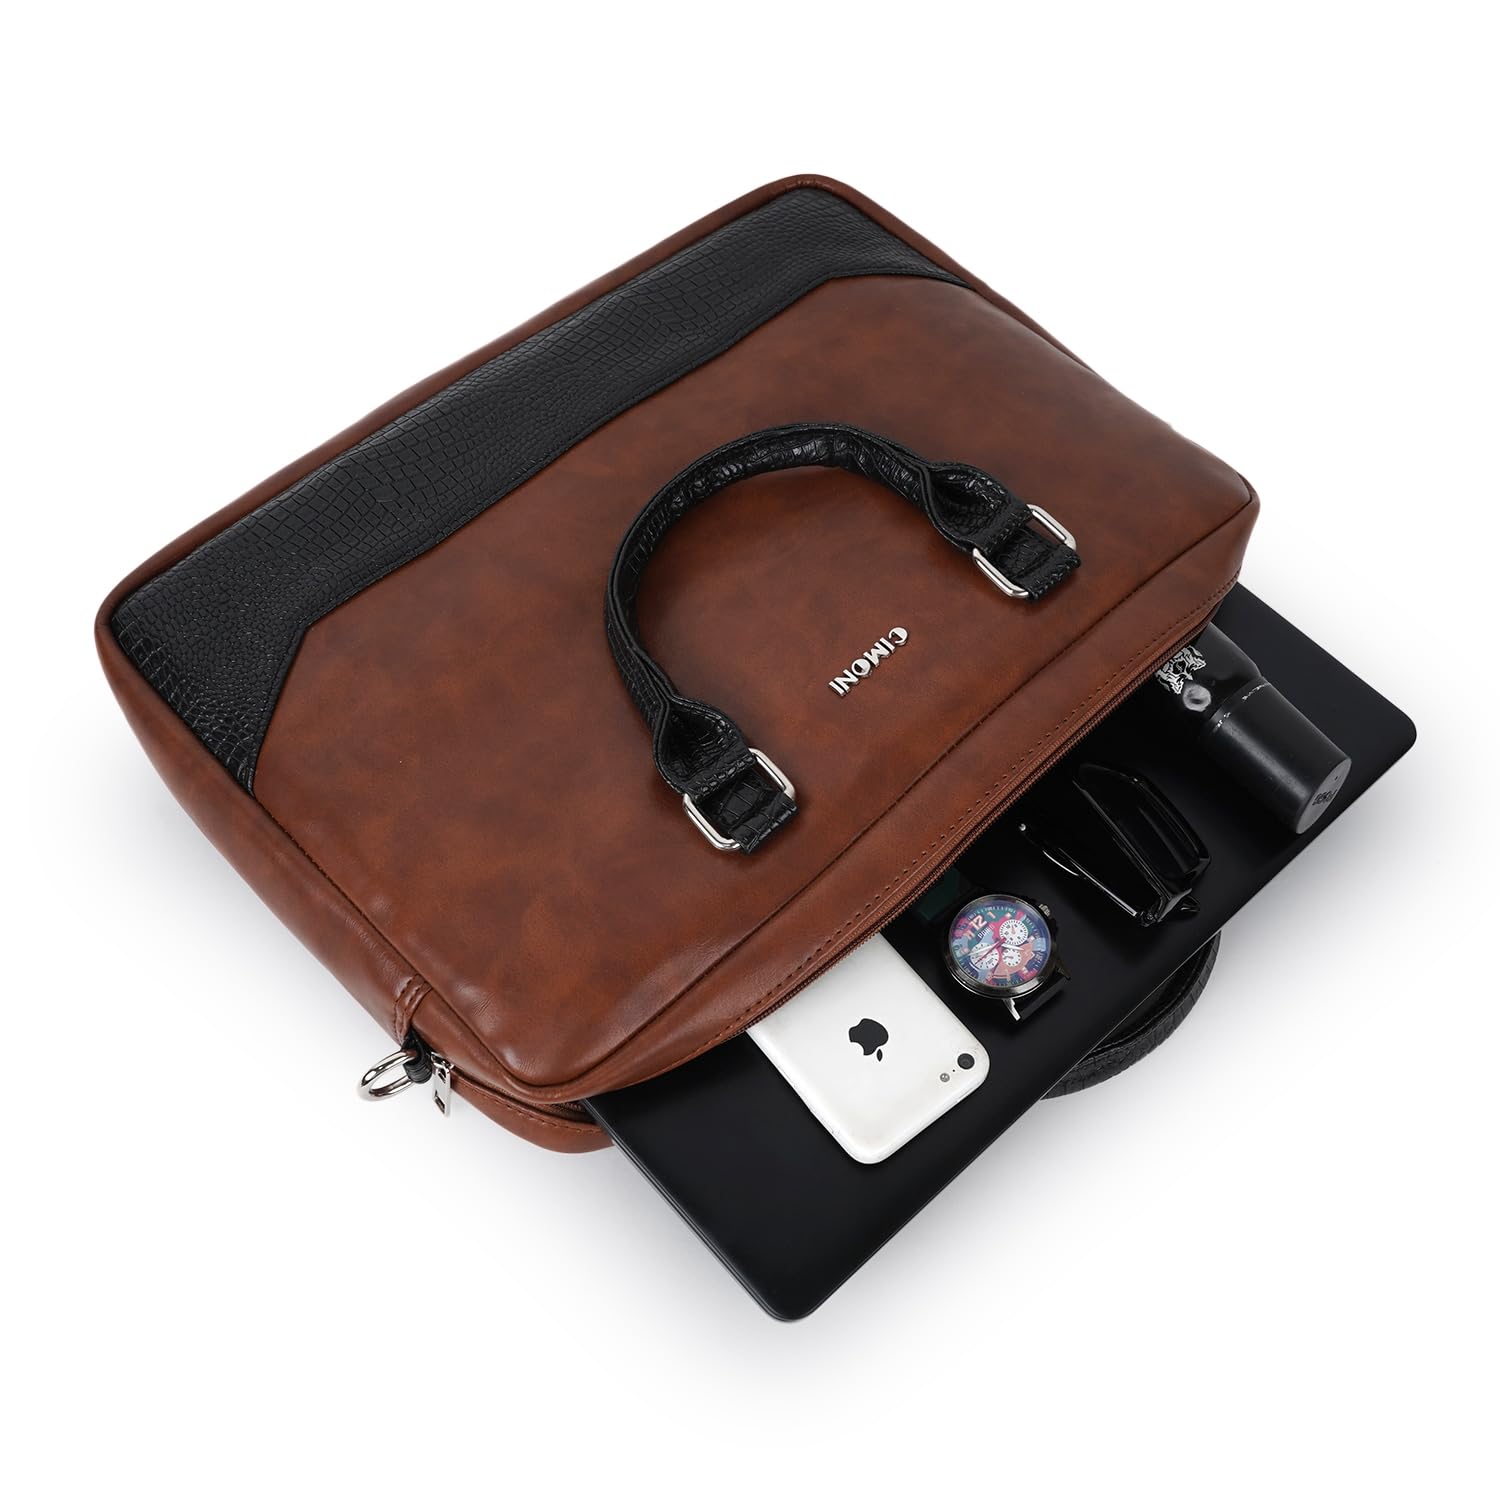 CIMONI Vegan Leather Bag Stylish Trendy Office Briefcase Laptop Bag College Crossbody Daytrip School Handheld Business Messenger Bag For Men (Color - Tan)